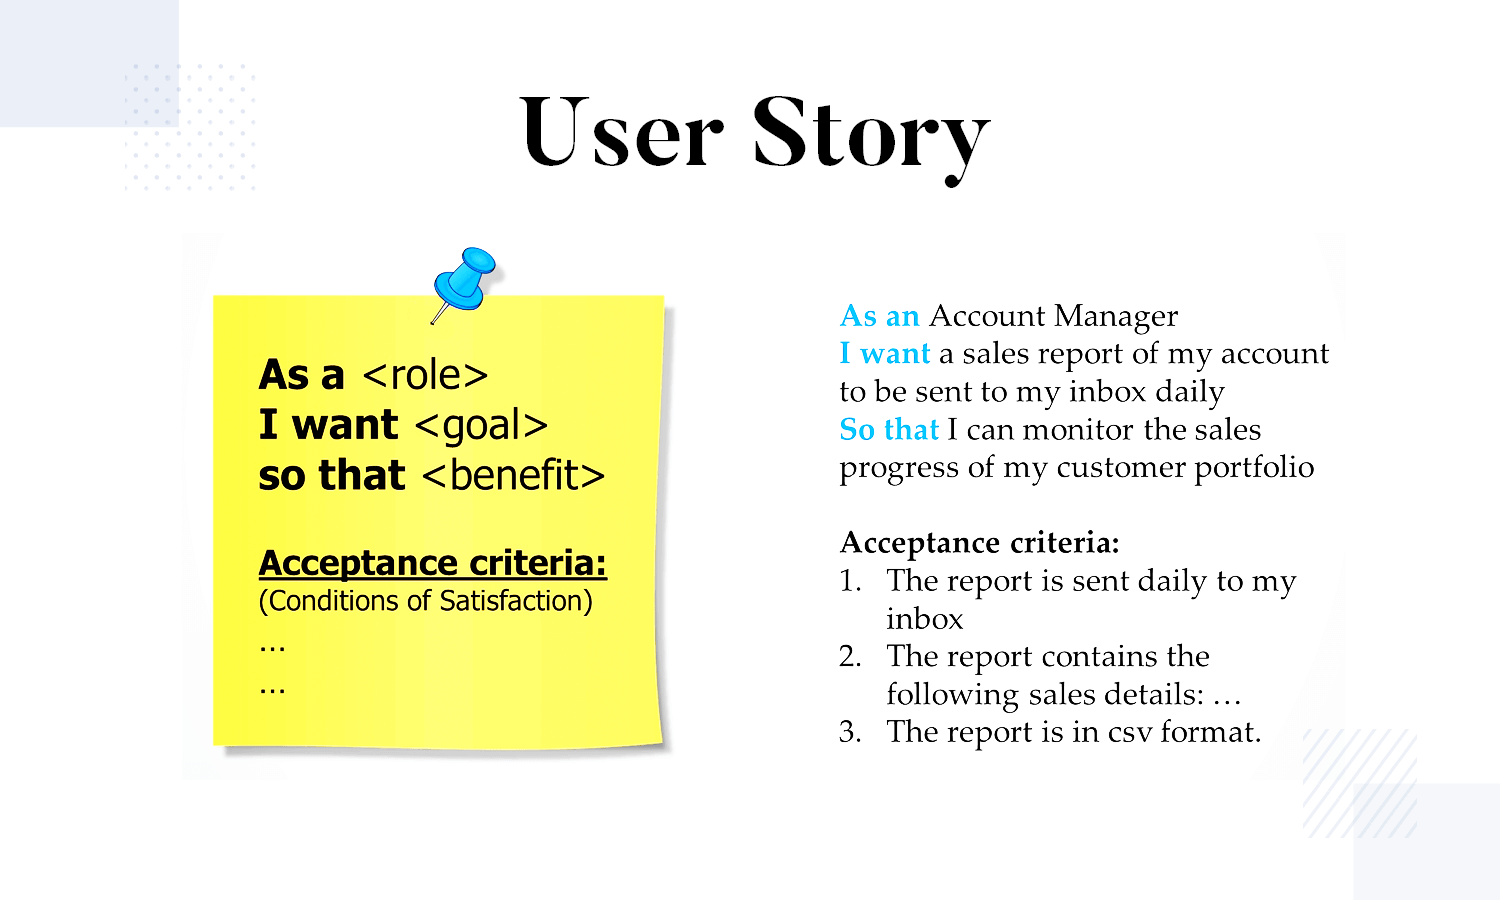 Agile Story Card Template